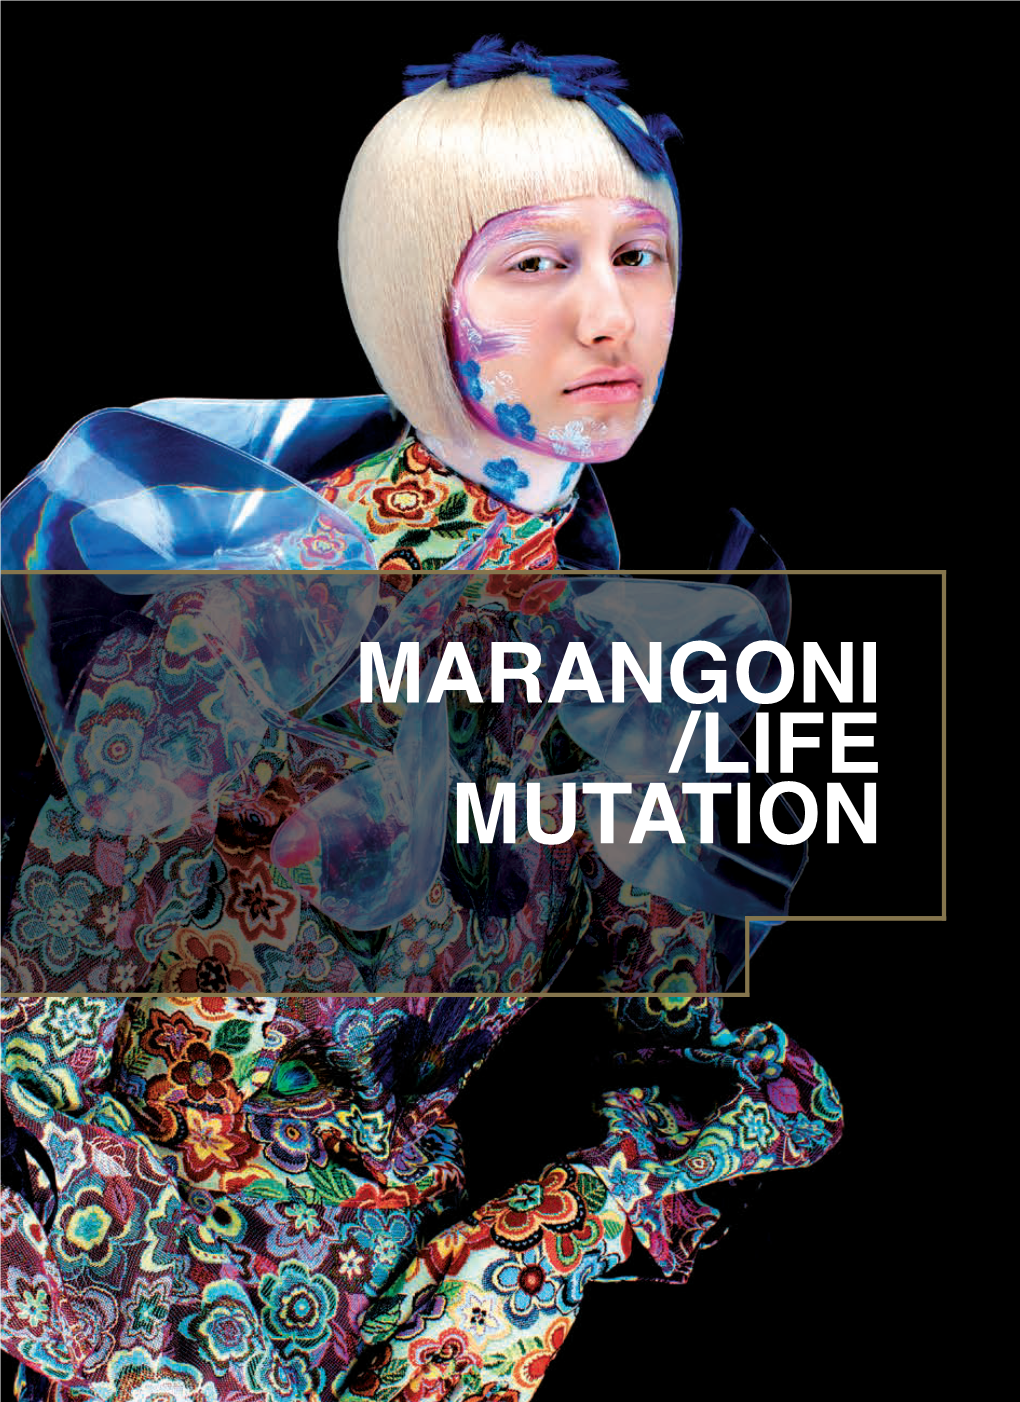 Marangoni /Life Mutation Start /The Real Transformation